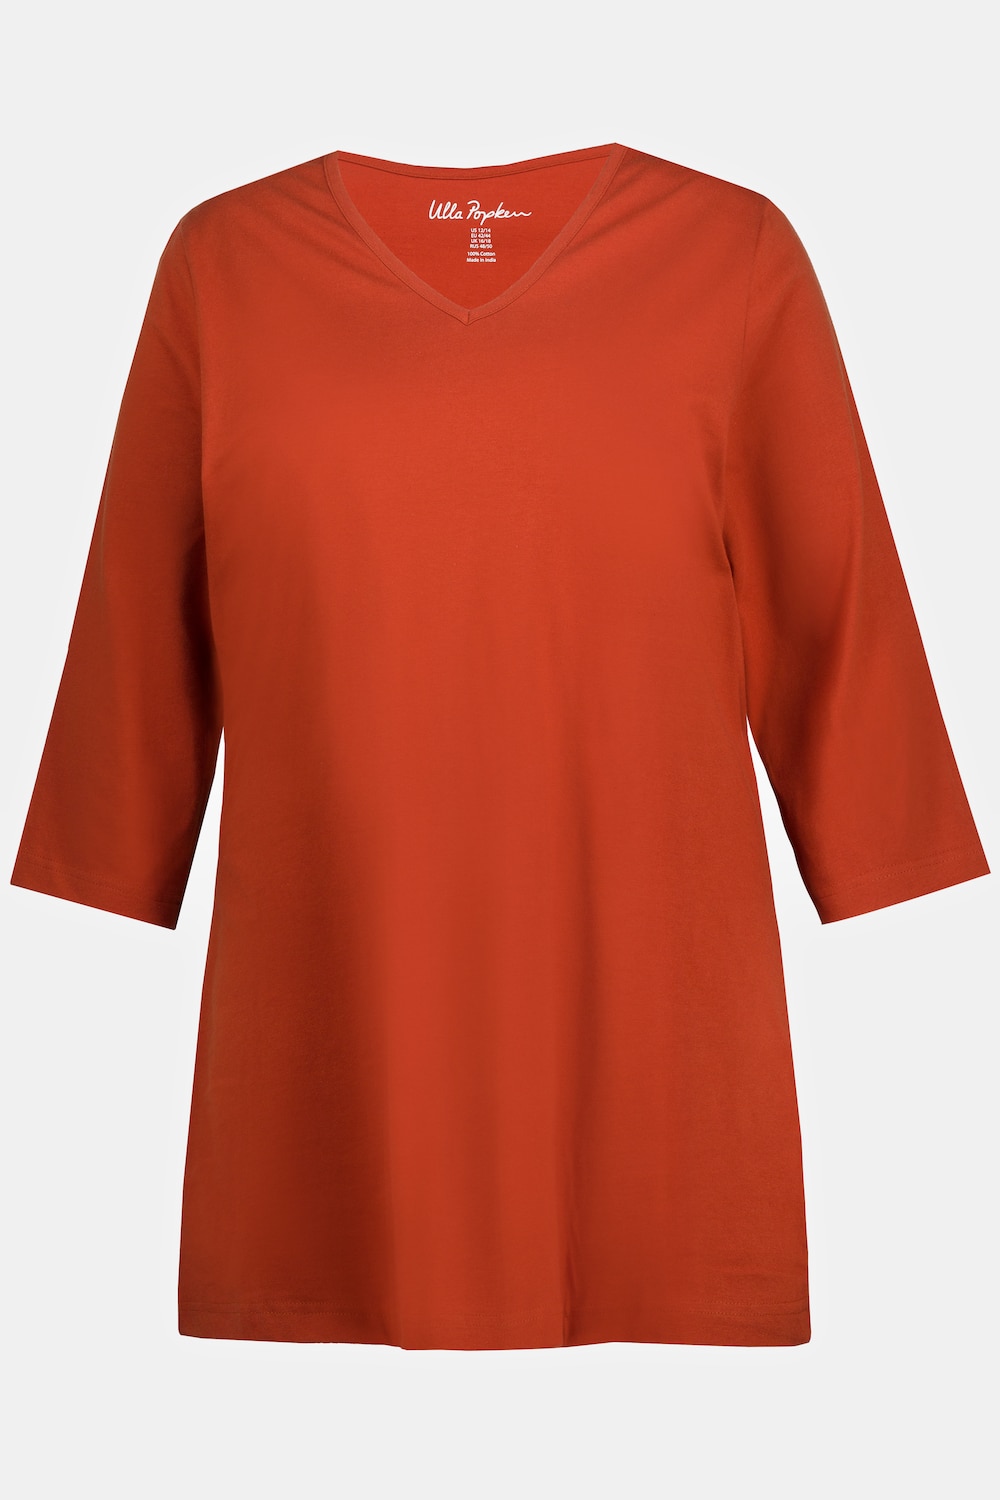 Grote Maten longline shirt, Dames, oranje, Maat: 62/64, Katoen, Ulla Popken